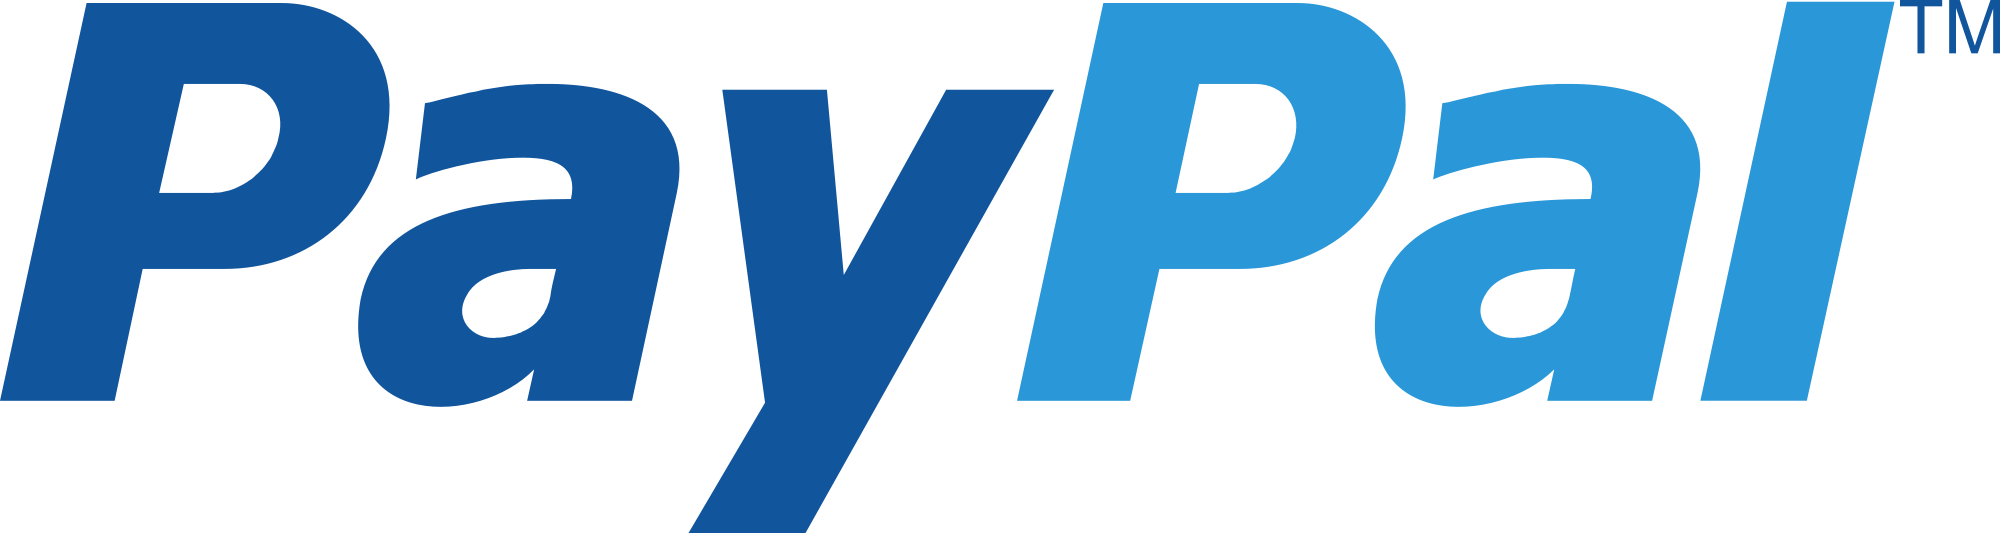 paypal logo svg